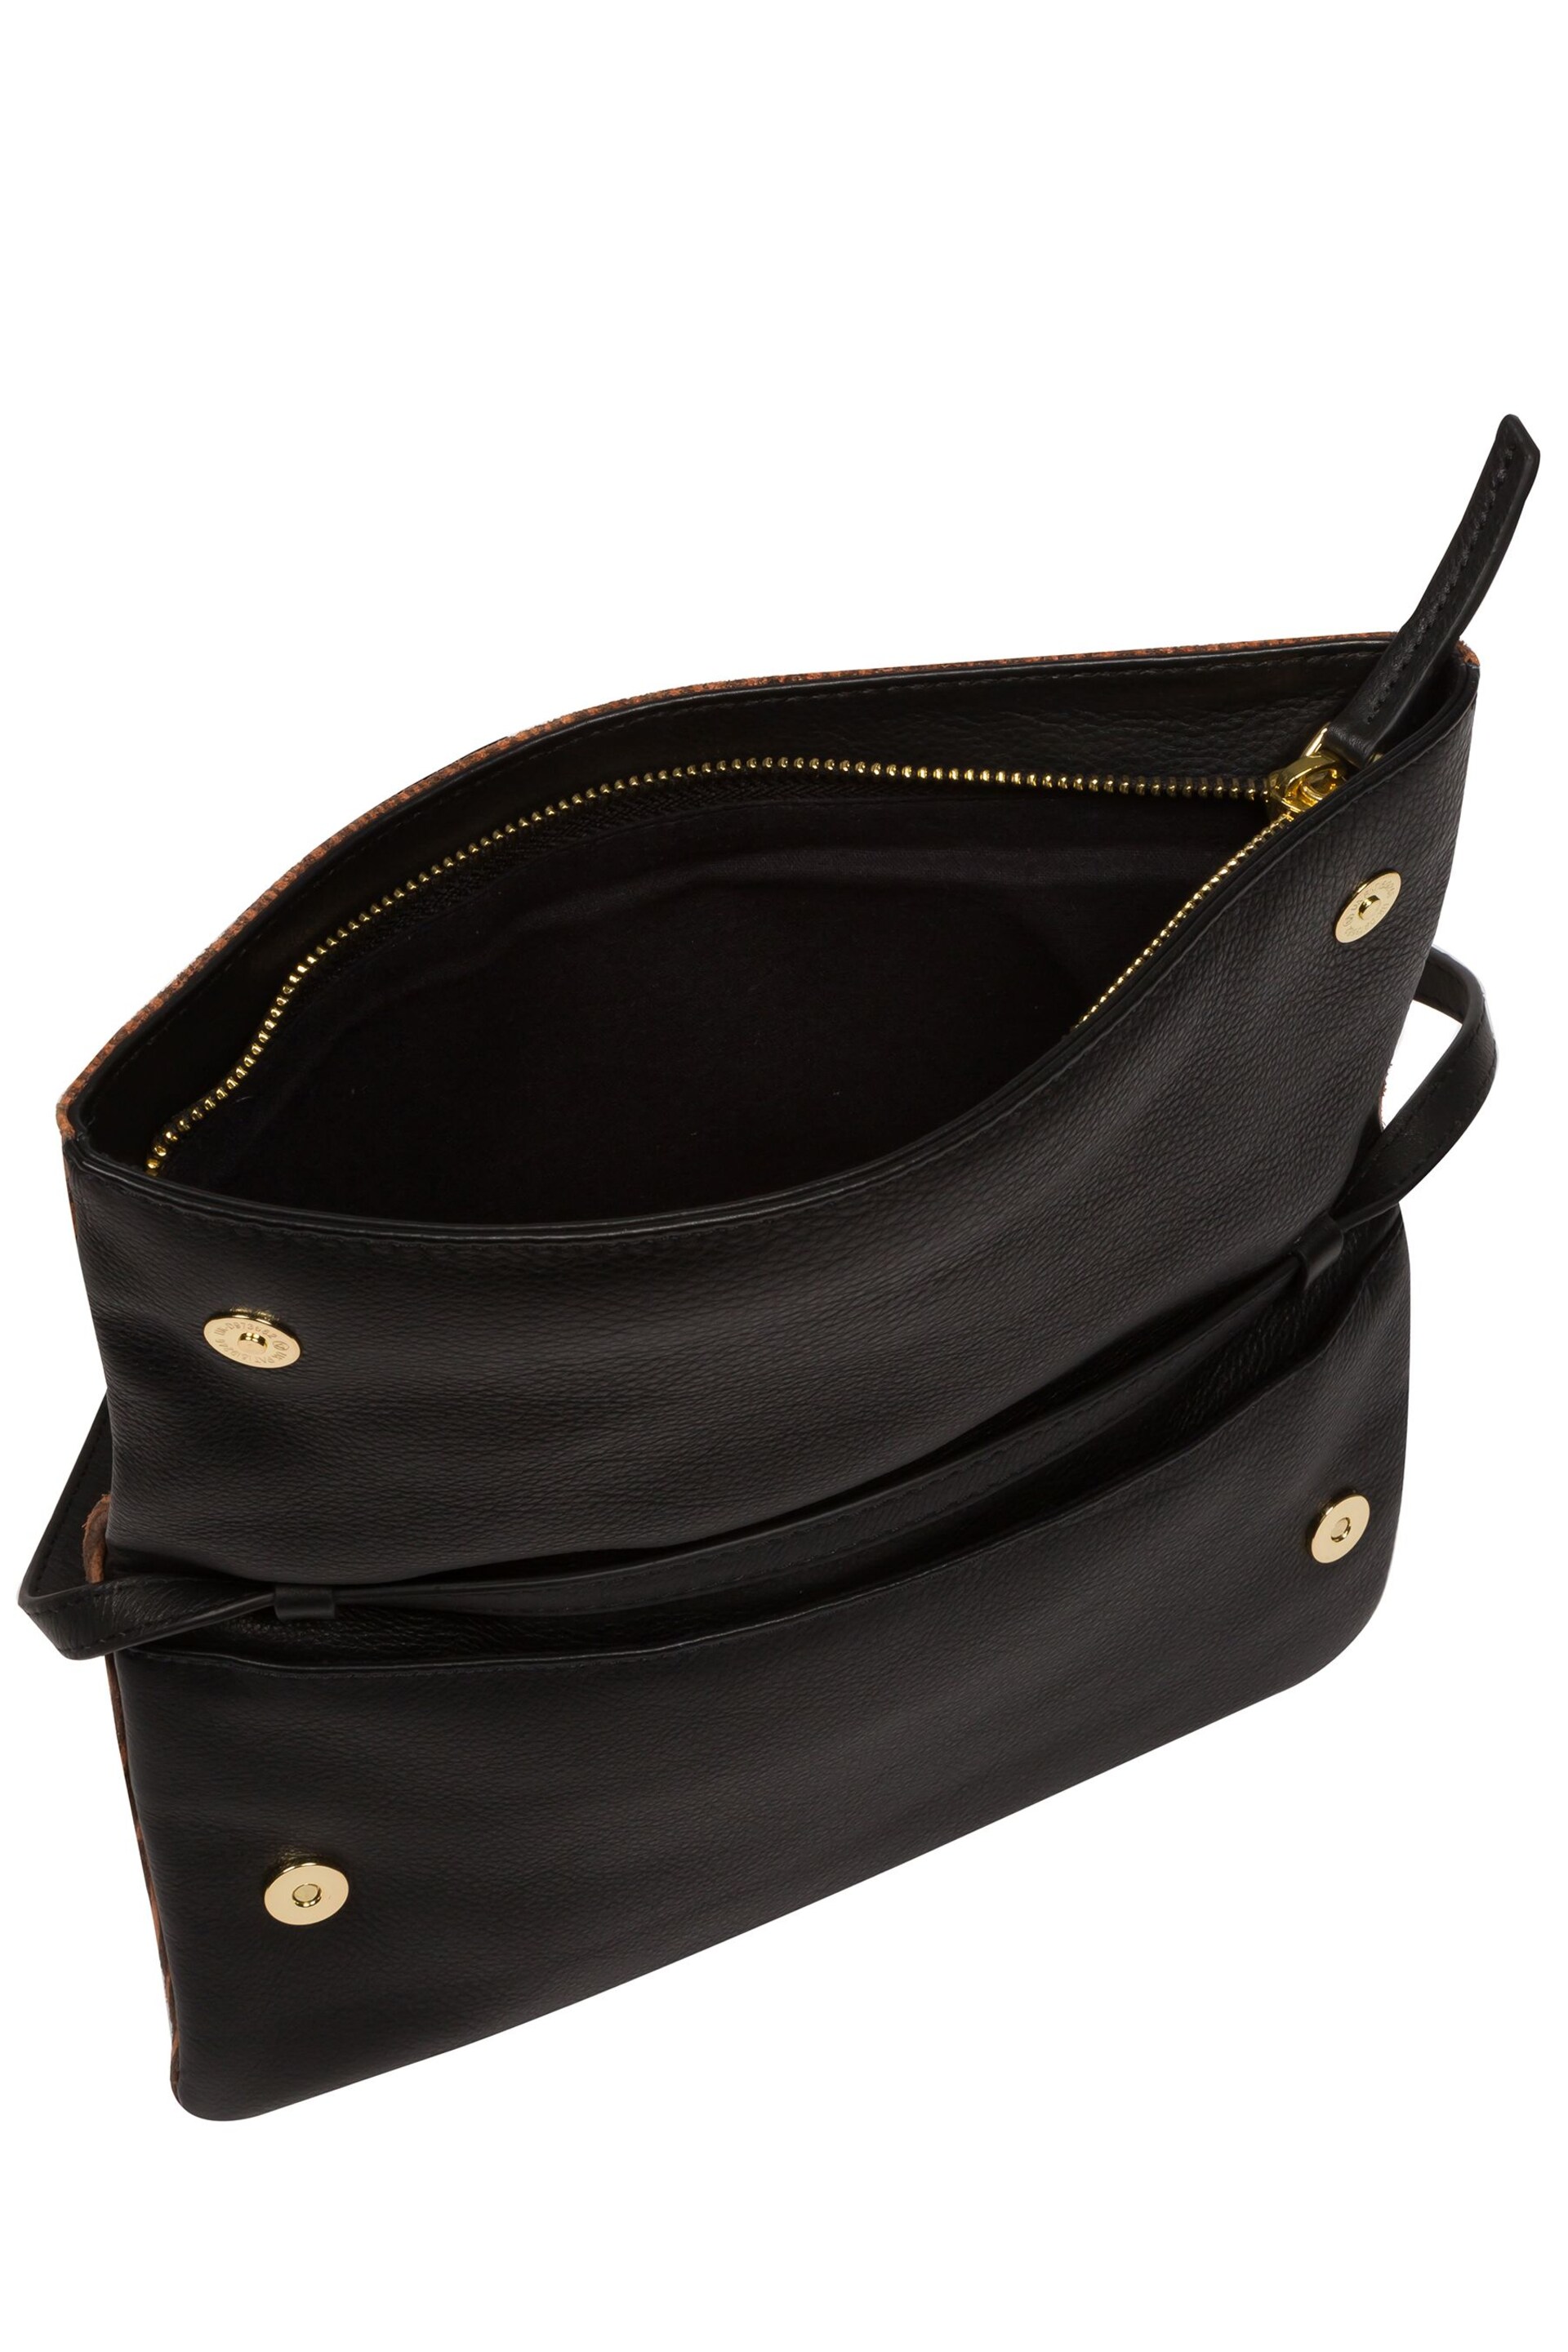 Pure Luxuries London Selene Nappa Leather Cross-Body Clutch Bag - Image 5 of 7